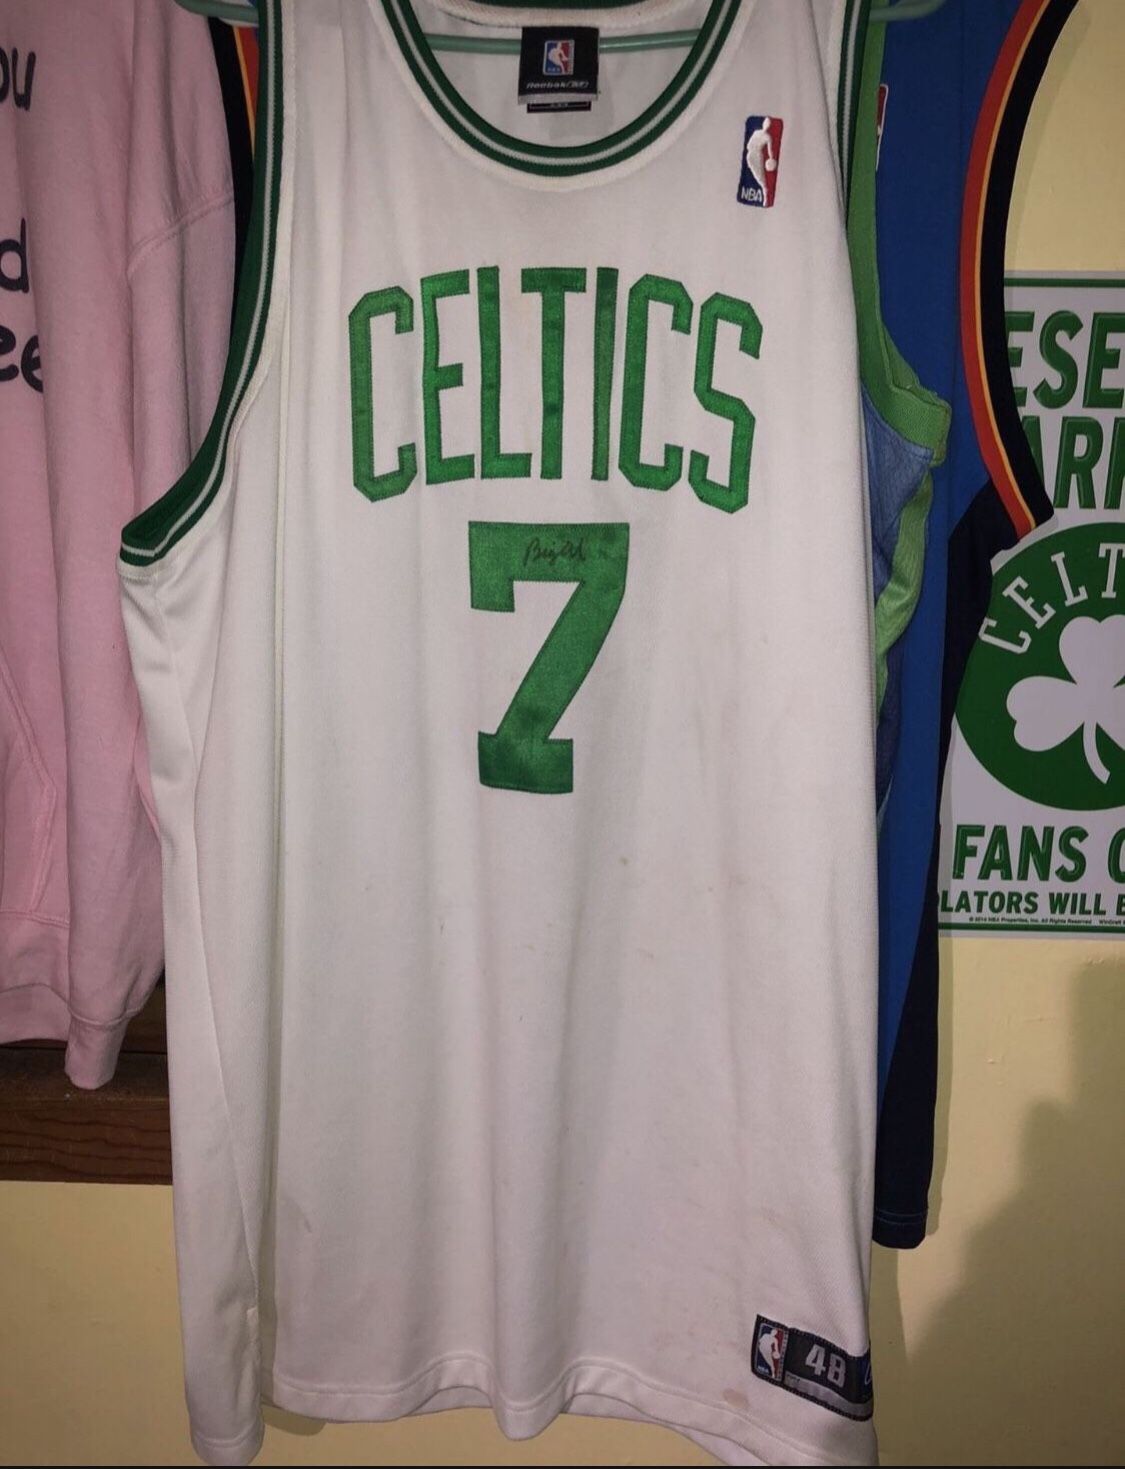 Authentic Celtics Game Worn Jersey